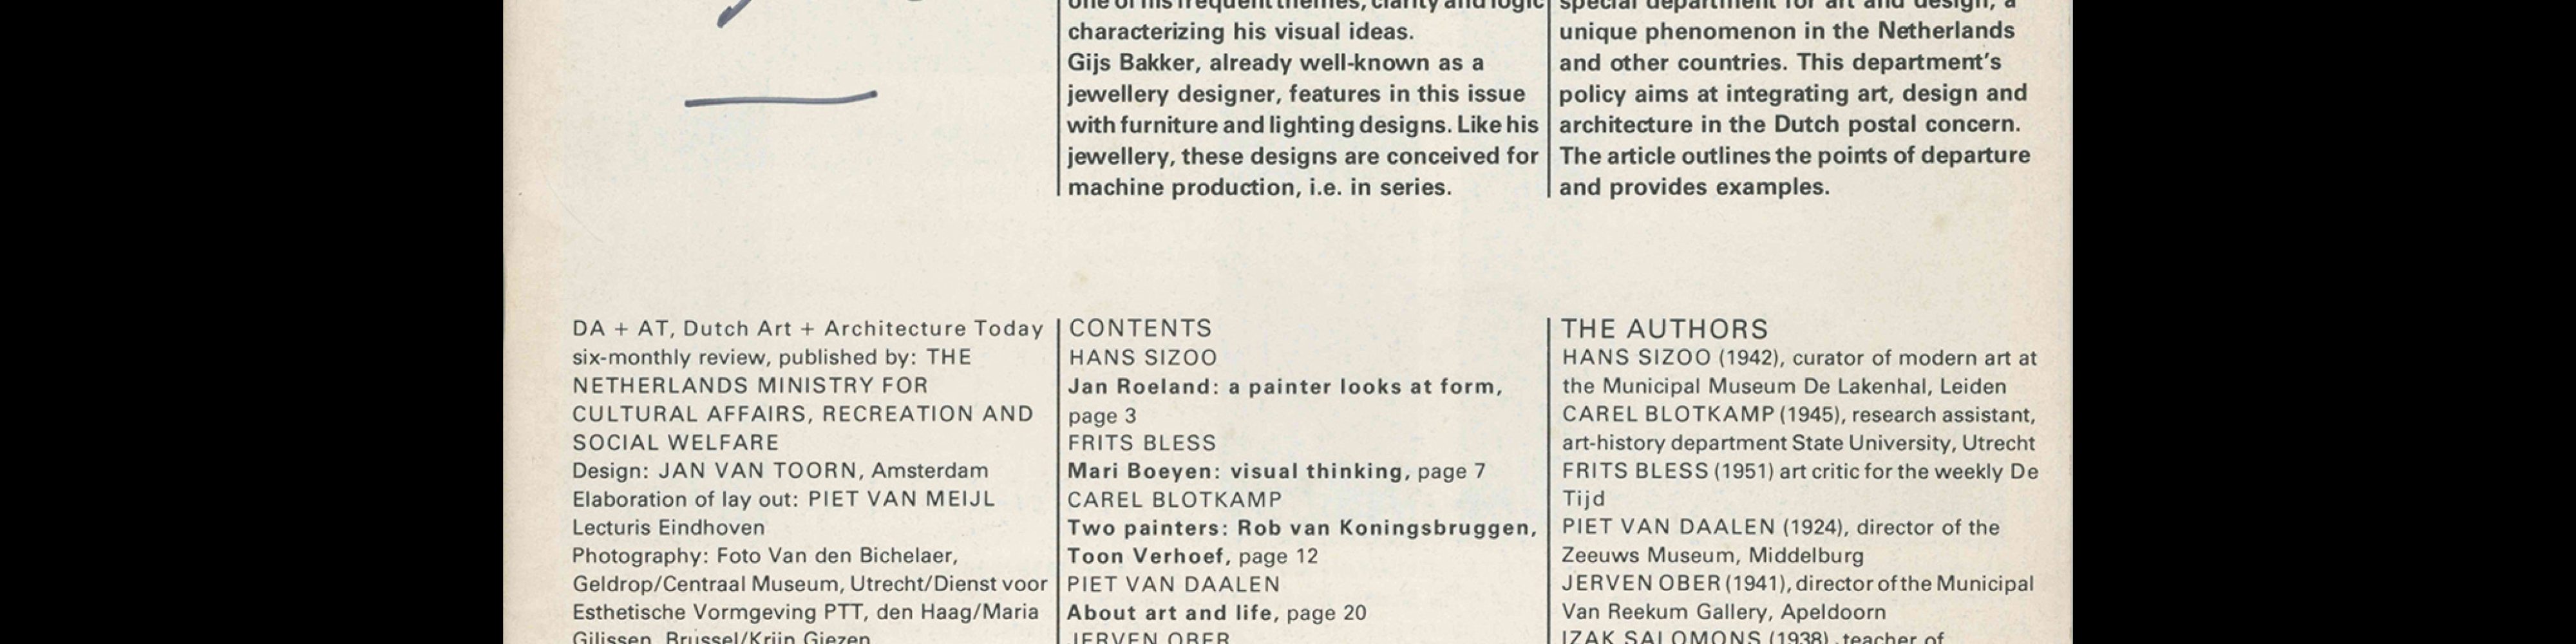 Dutch Art + Architecture Today 05, 1979. Designed by Jan van Toorn